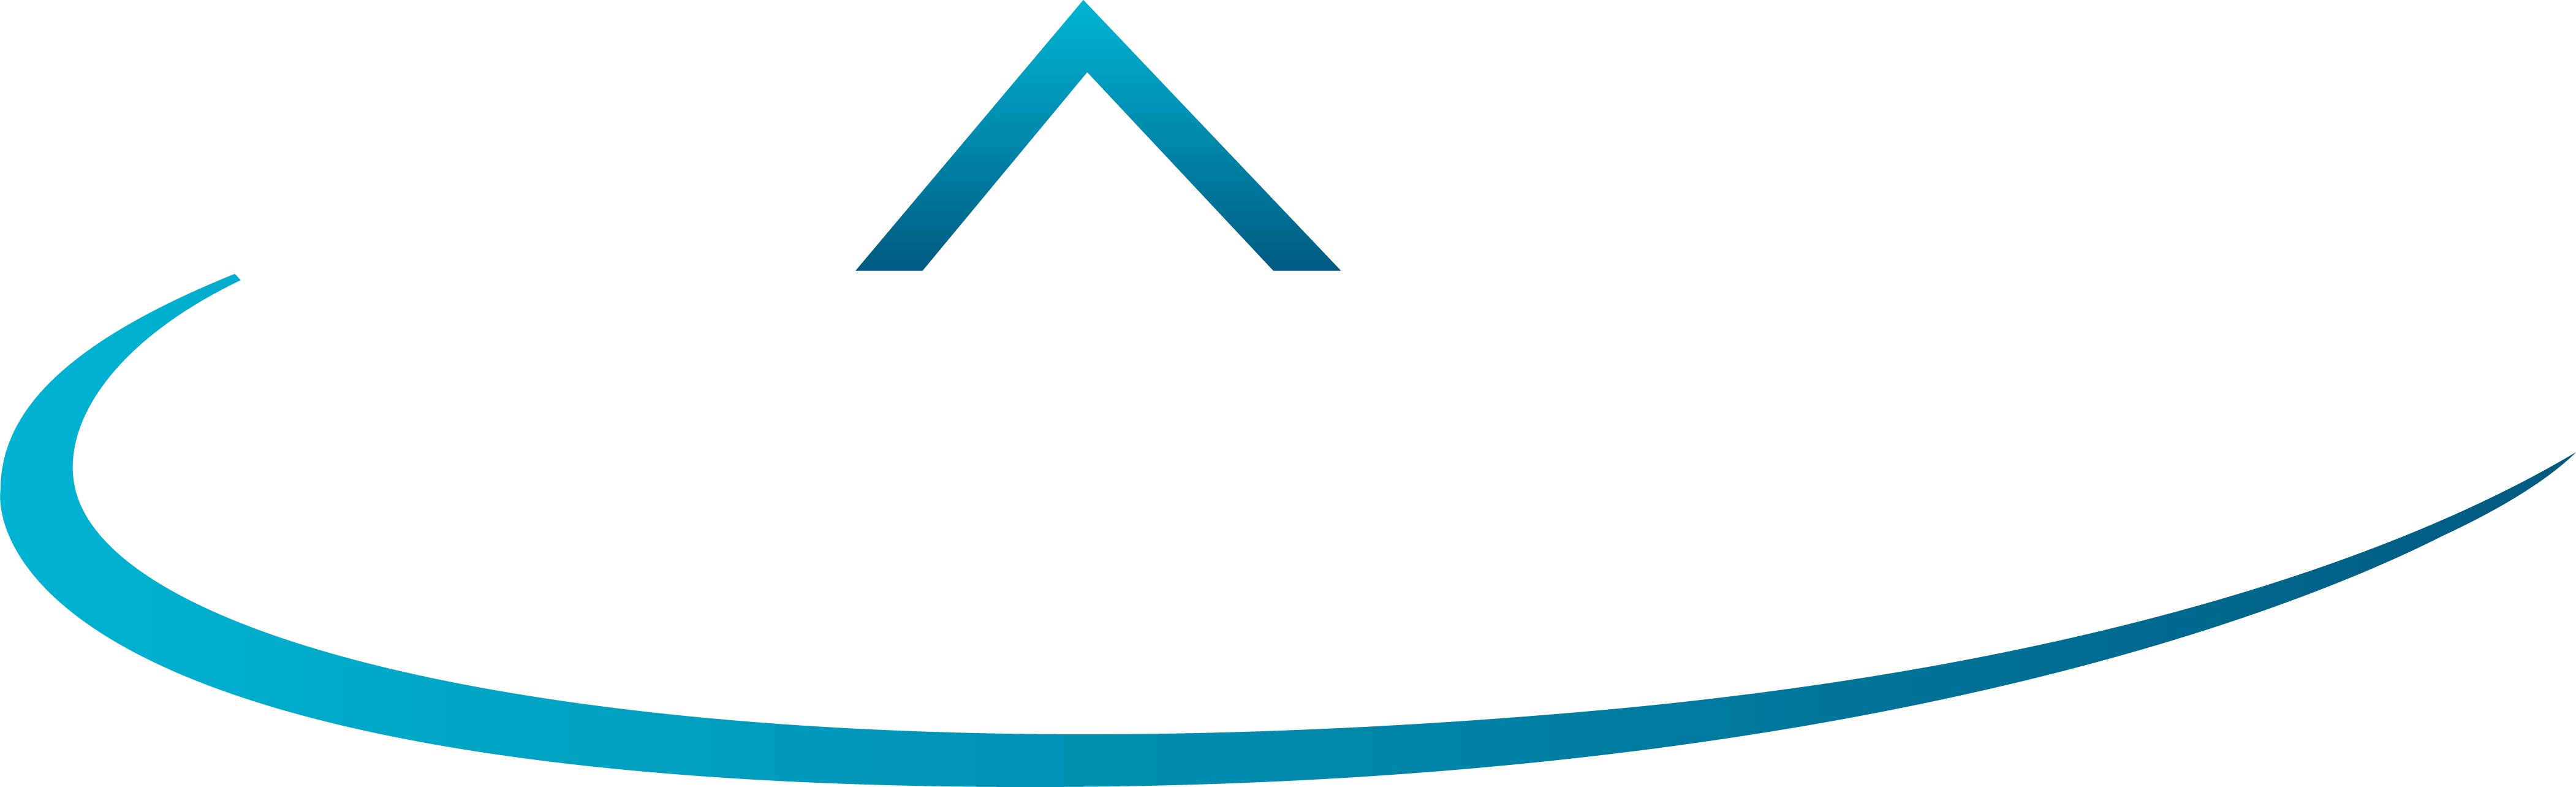 advanced roofing logo white